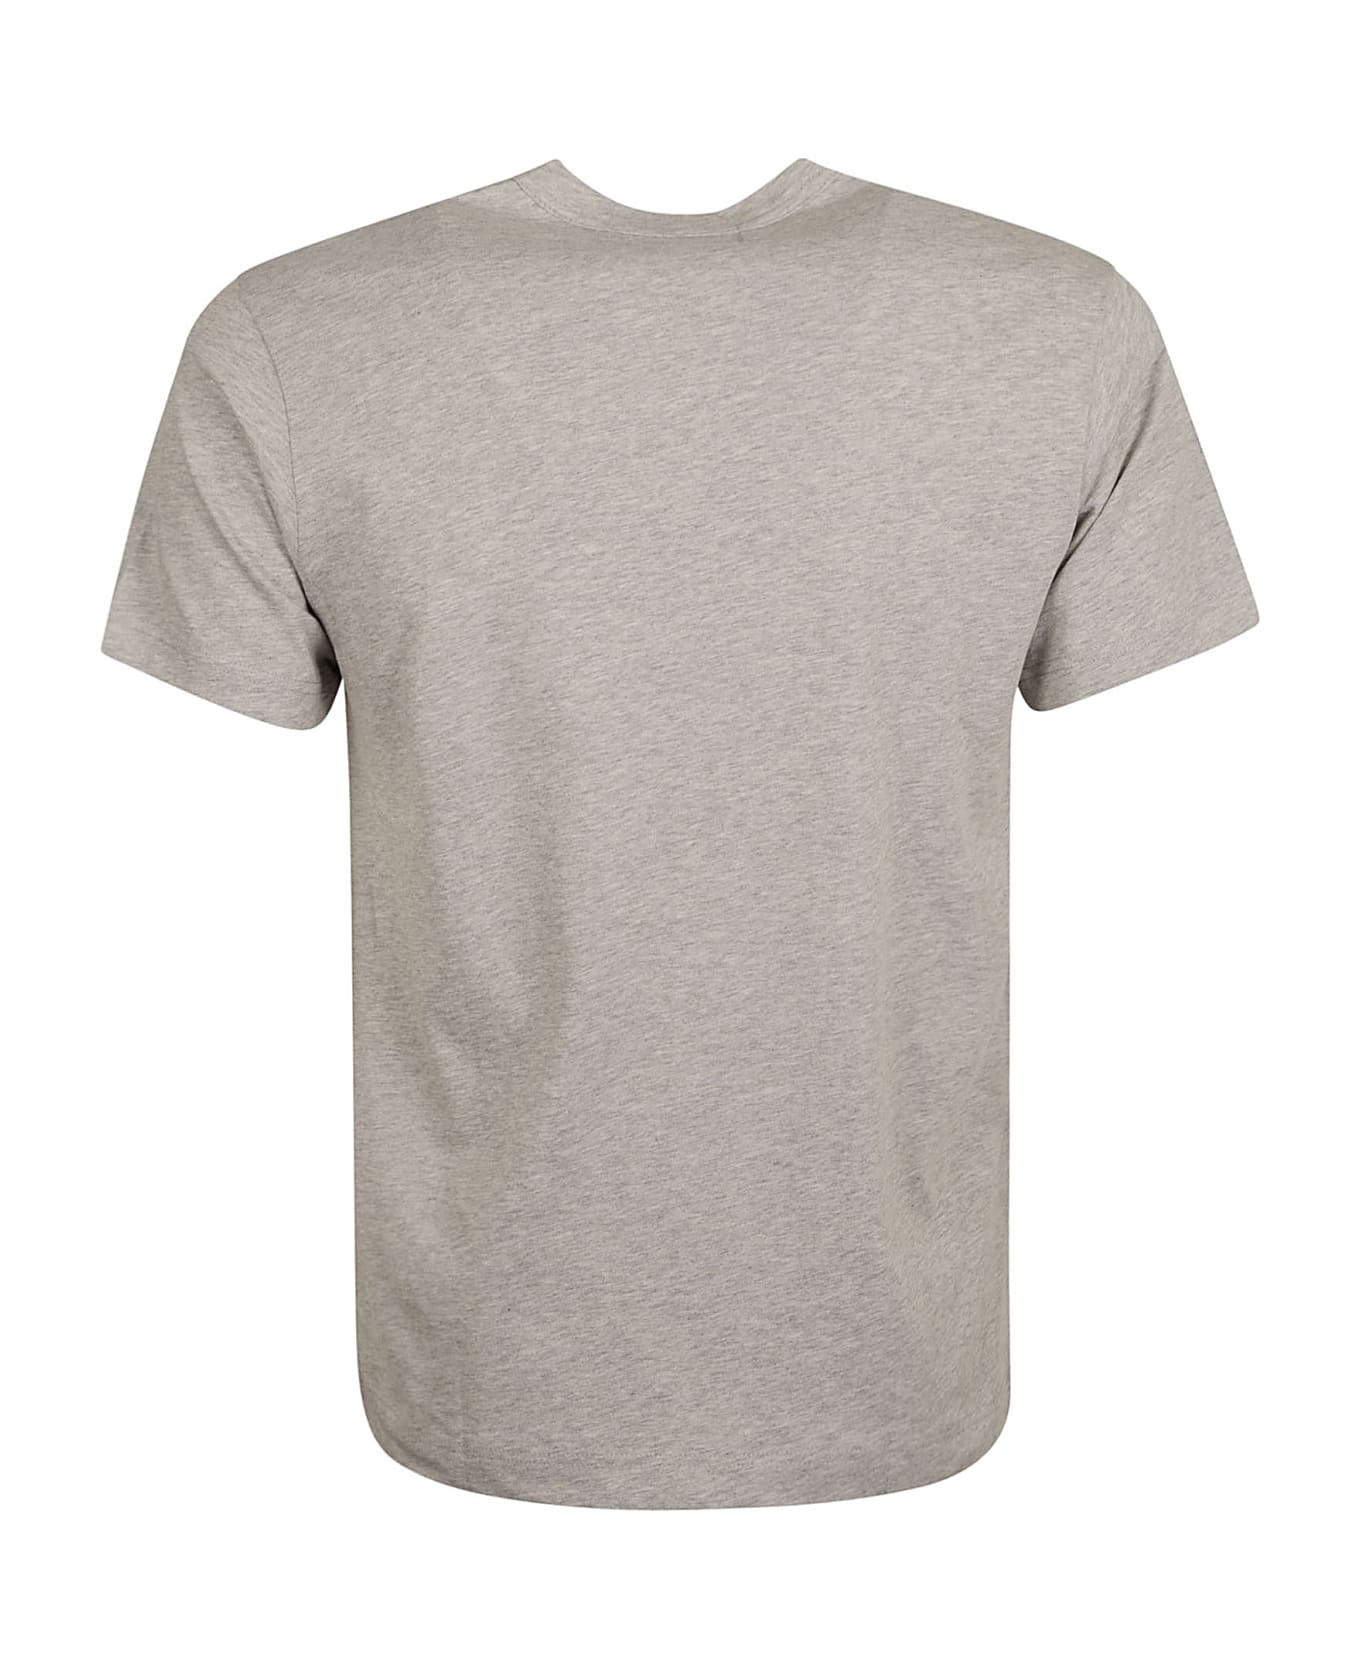 Comme des Garçons Shirt Multi Croco Print Regular T-shirt - Top Grey シャツ